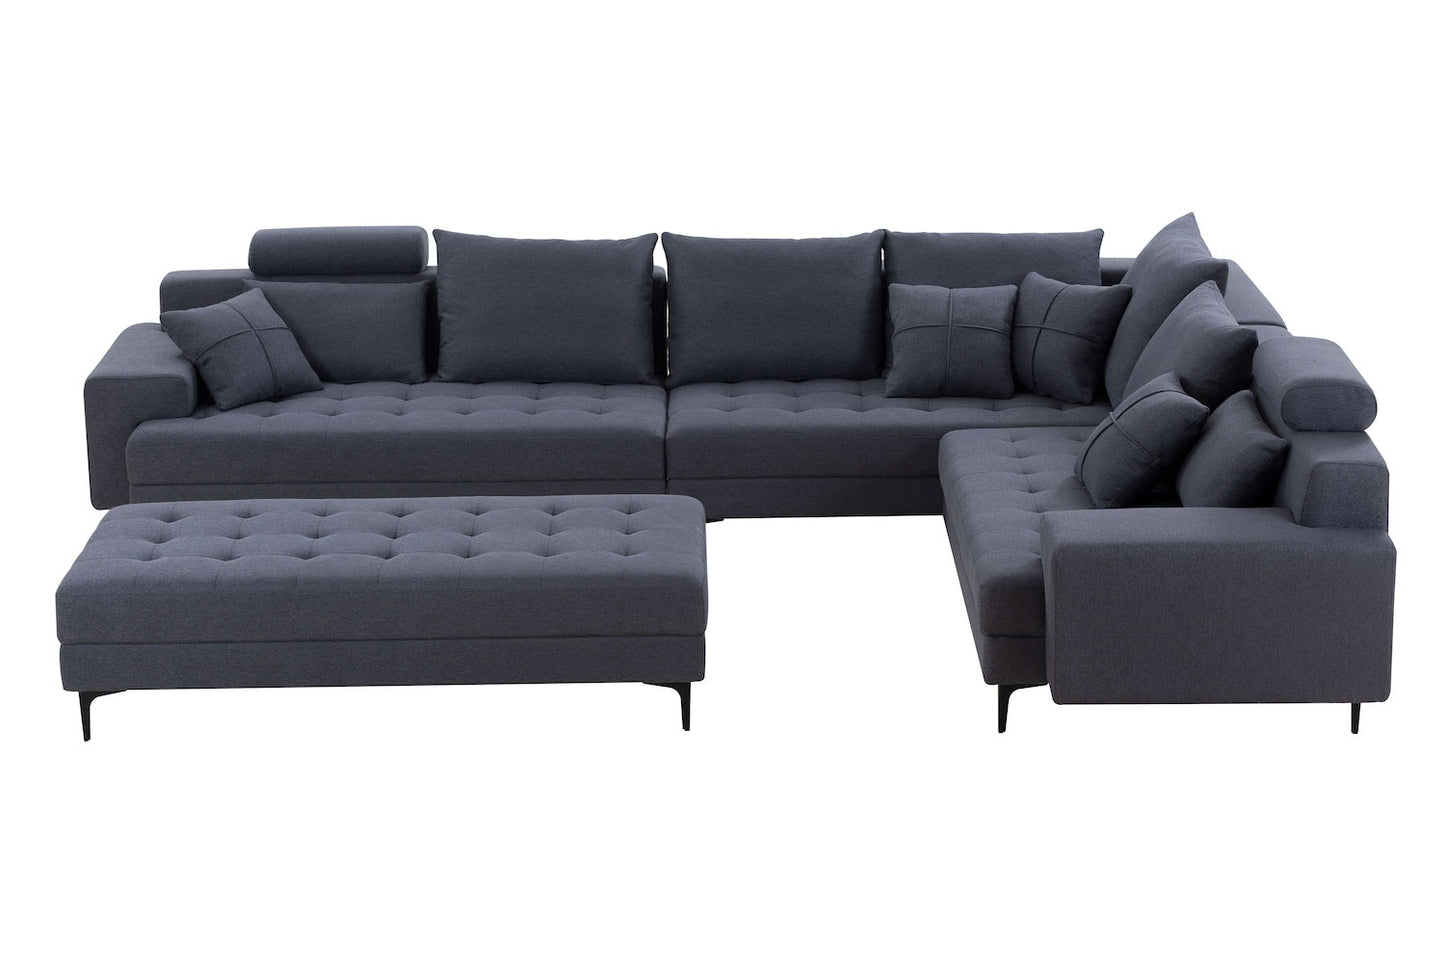 Justone Interior 144" Modern Reversible Sectional Sofa in Dark Gray Linen